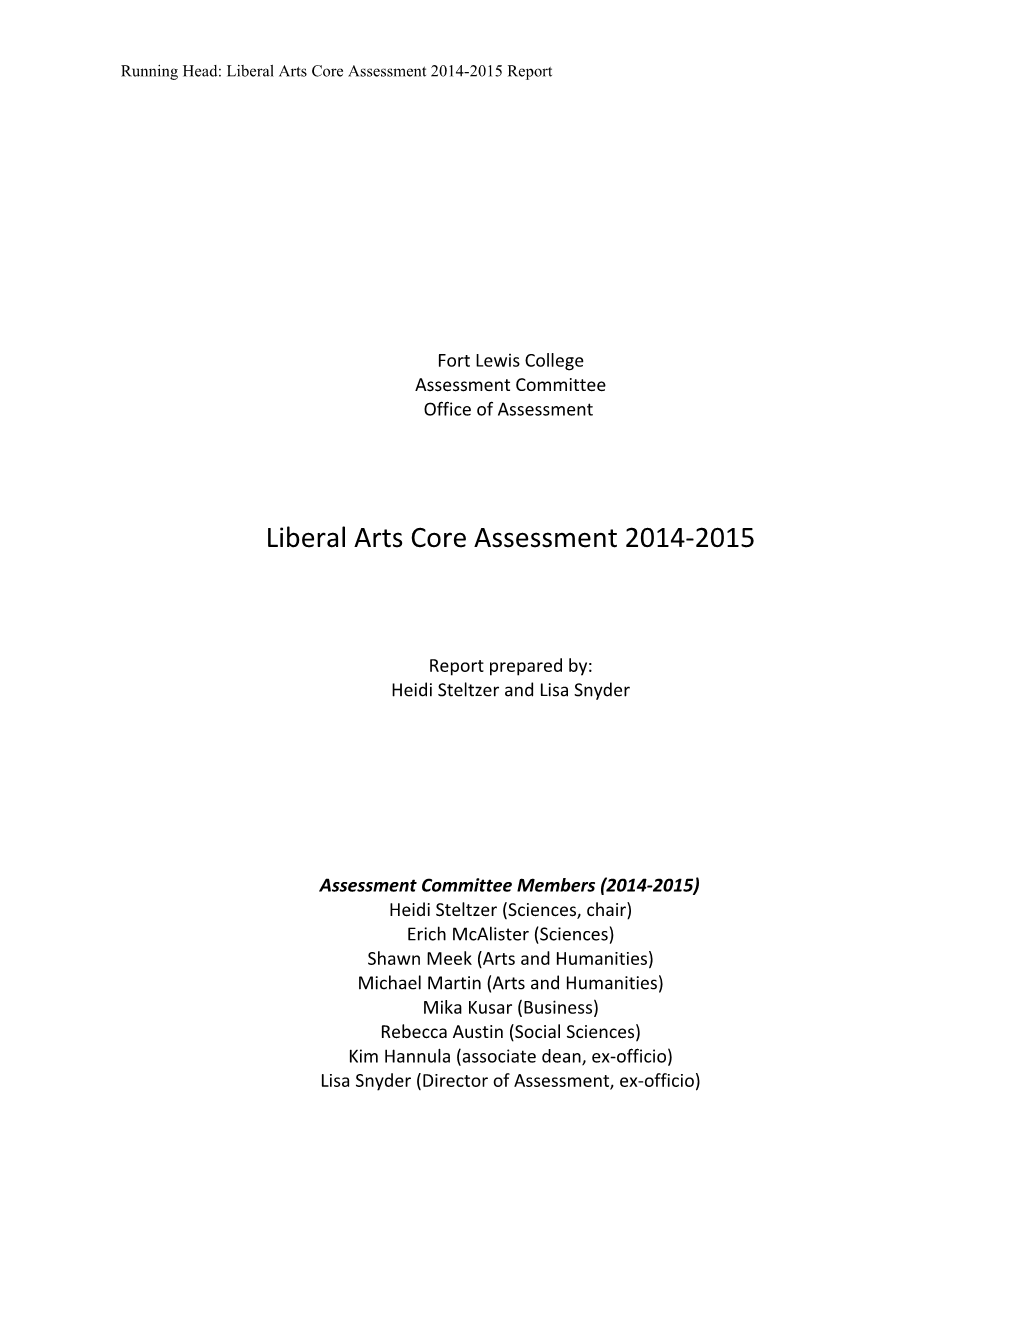 Liberal Arts Core Assessment 2014-2015 Report